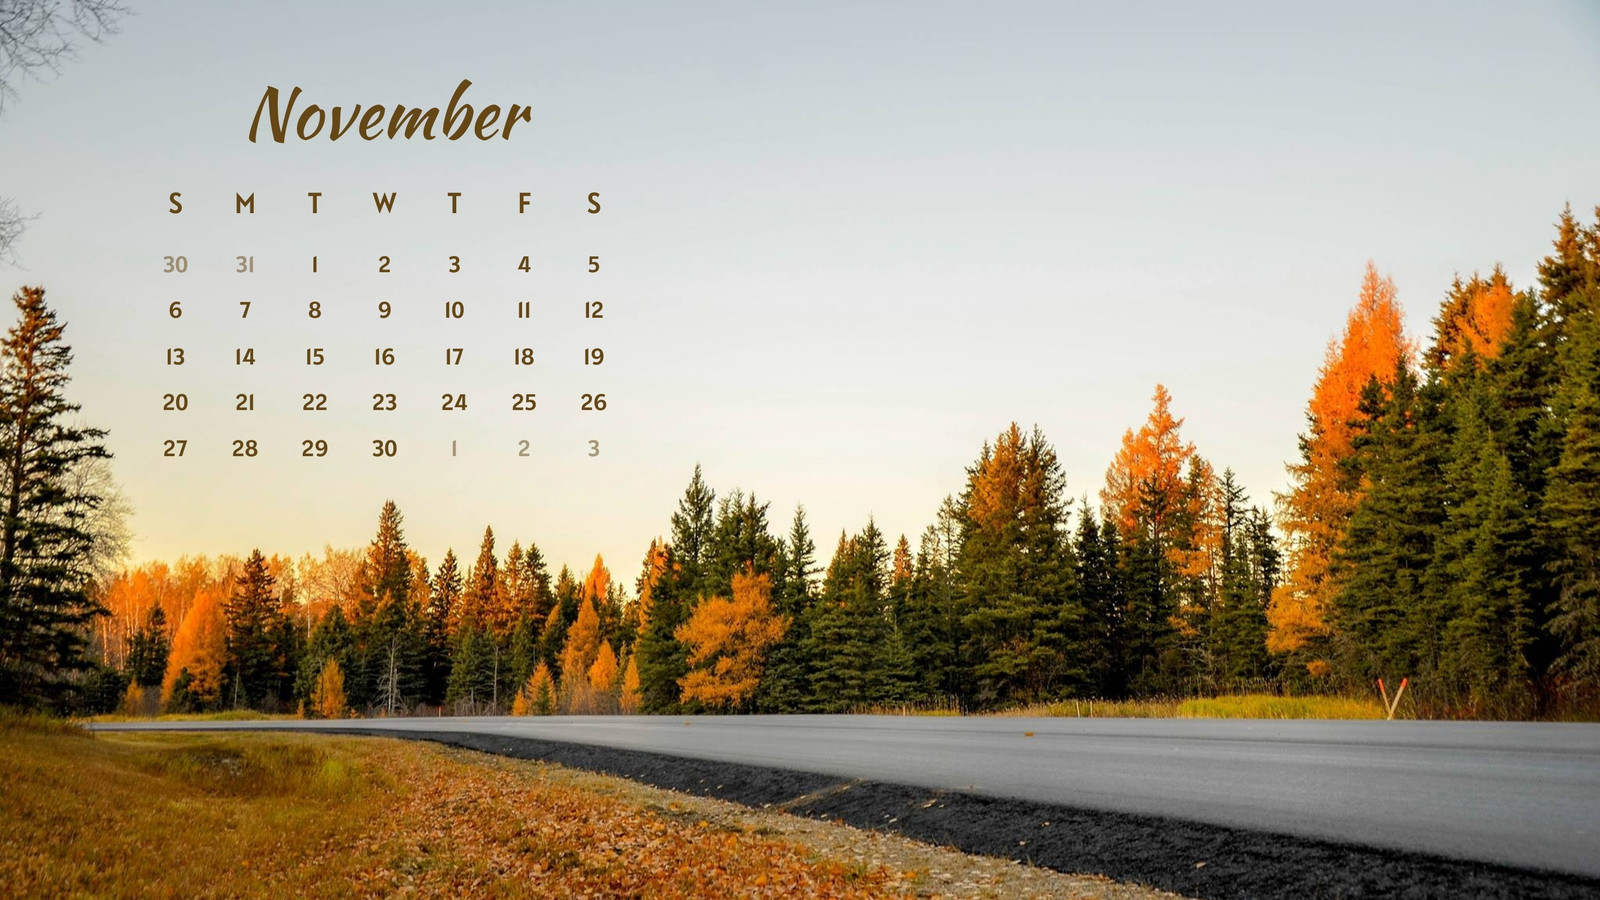 November 2021 wallpapers  35 FREE calendars for desktop and phones